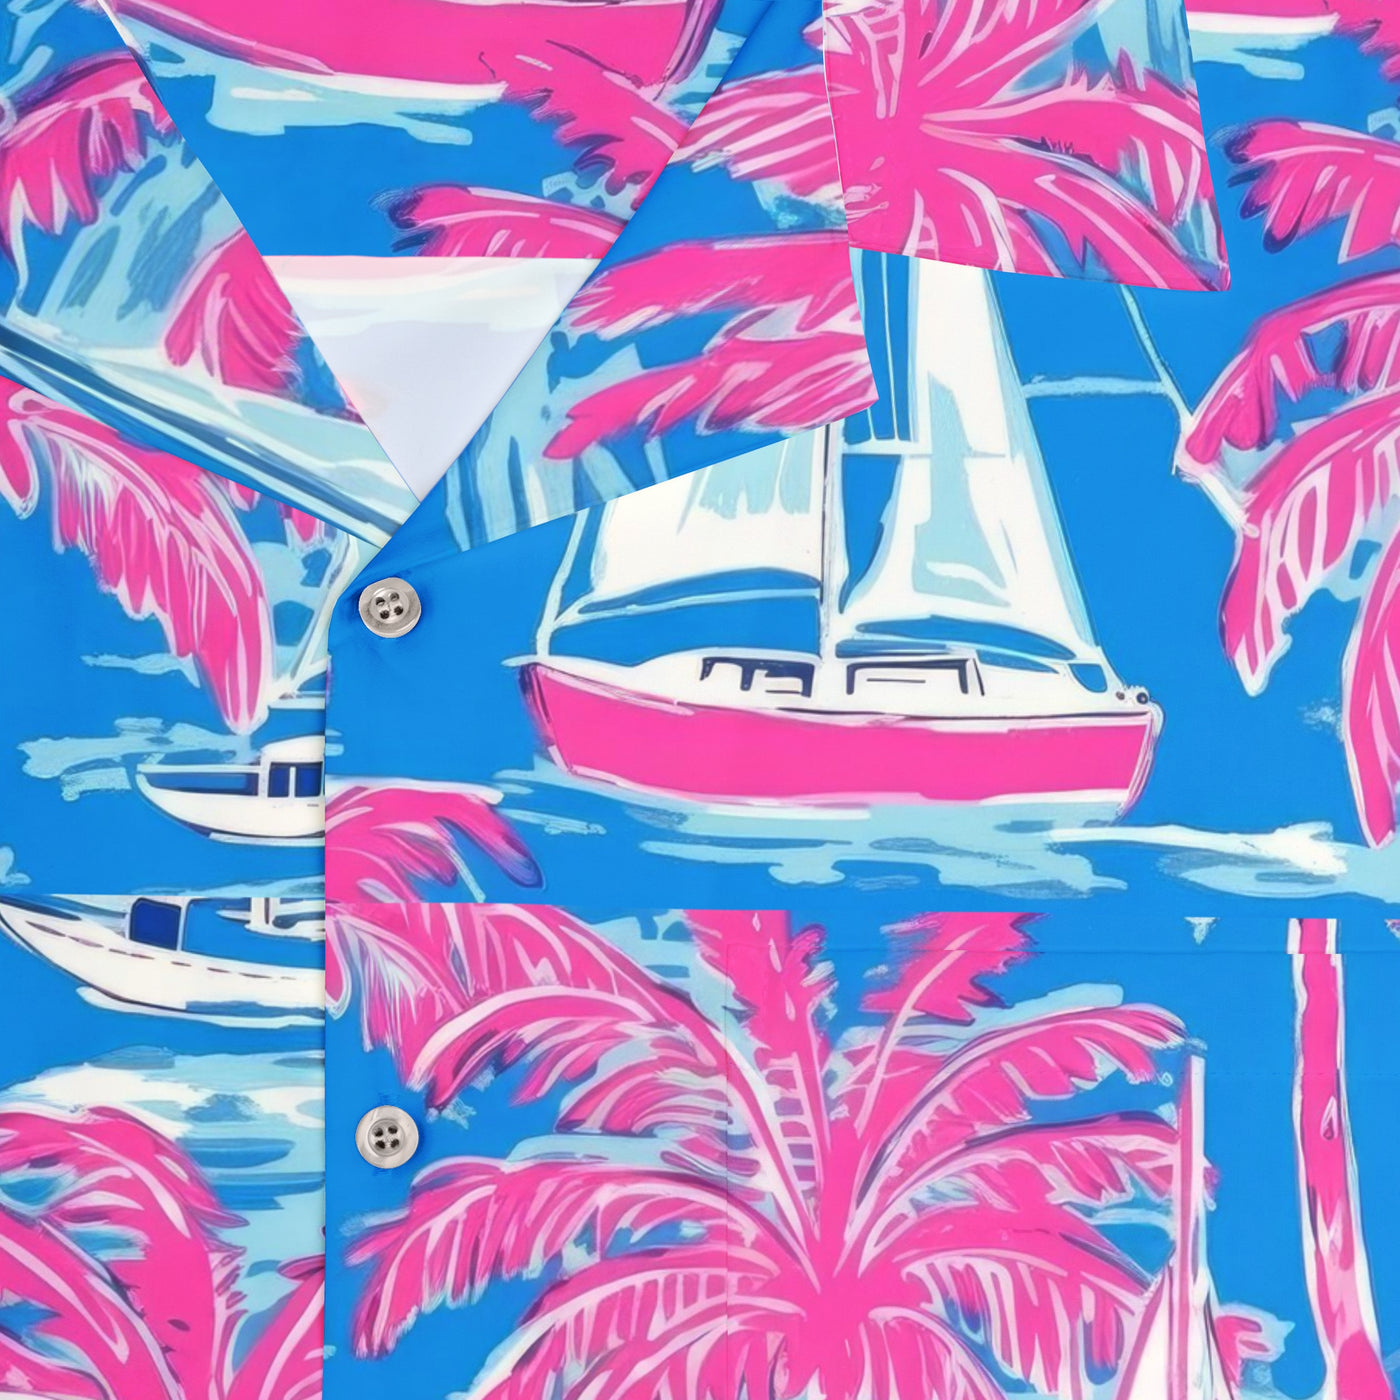 Sailors Paradise Short Sleeve - Coastal Cool - Swimwear and Beachwear - Recycled fabrics